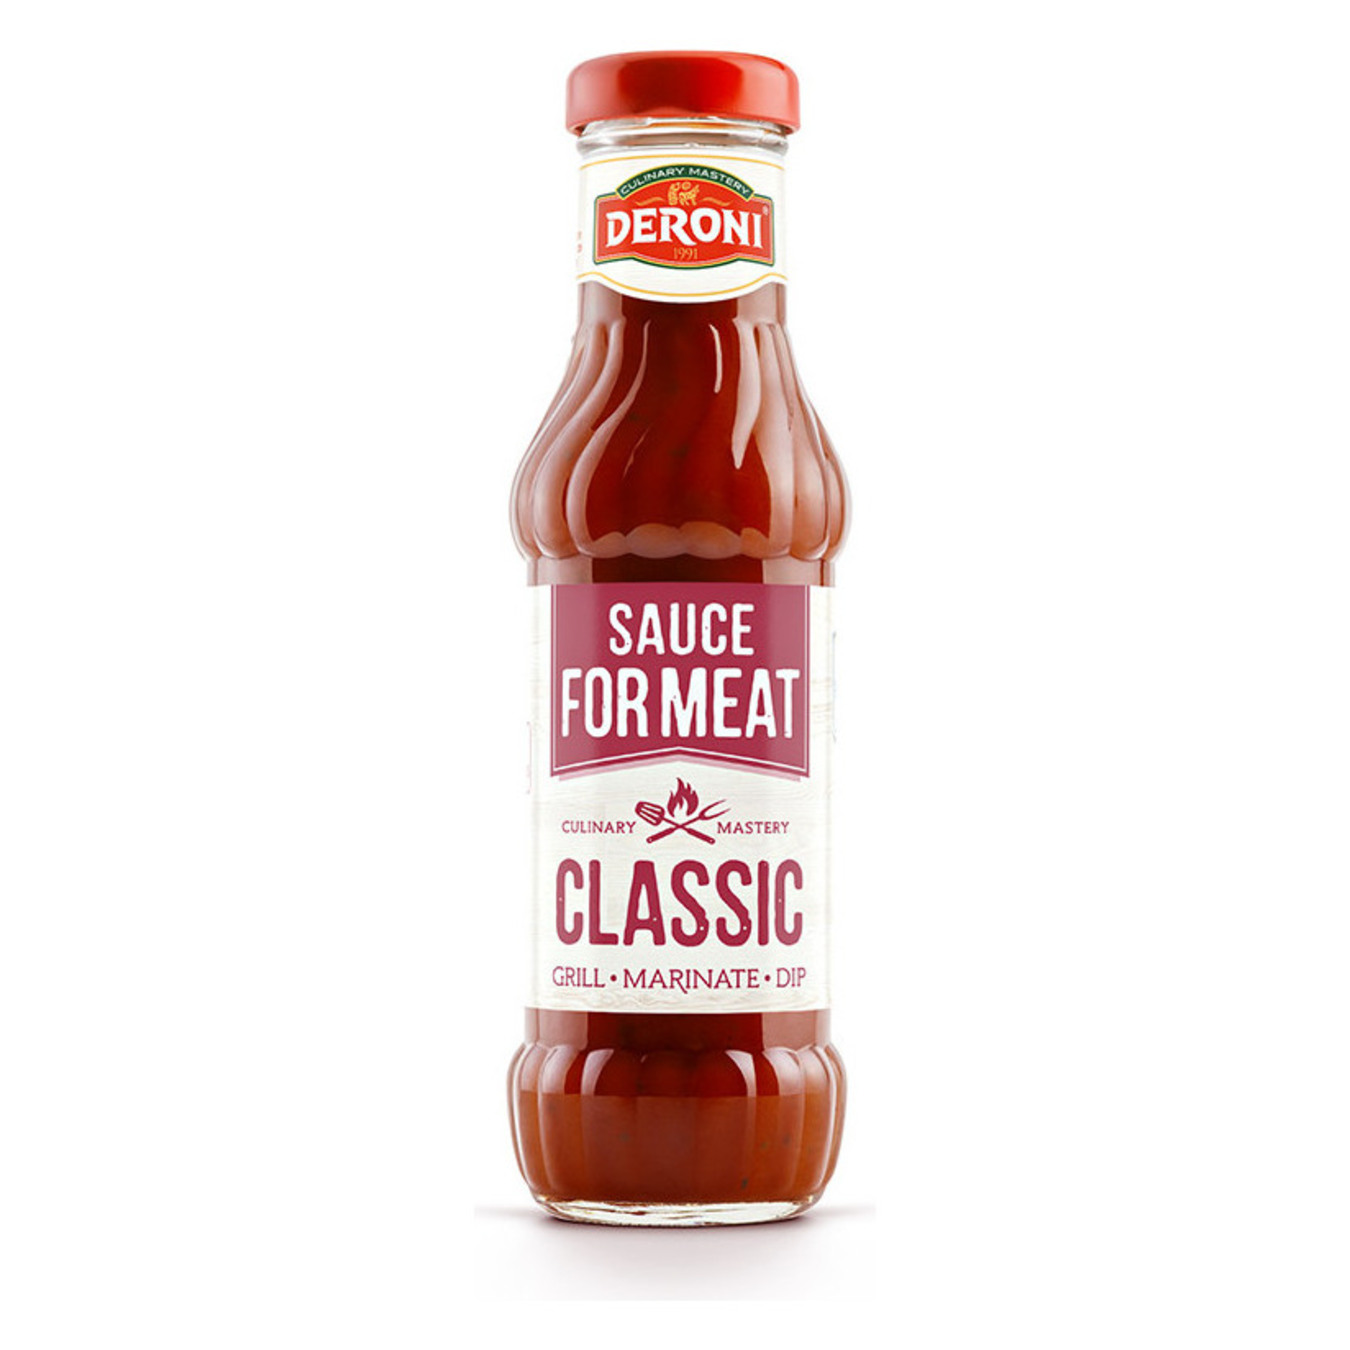 Deroni classic grilled paprika sauce 320g